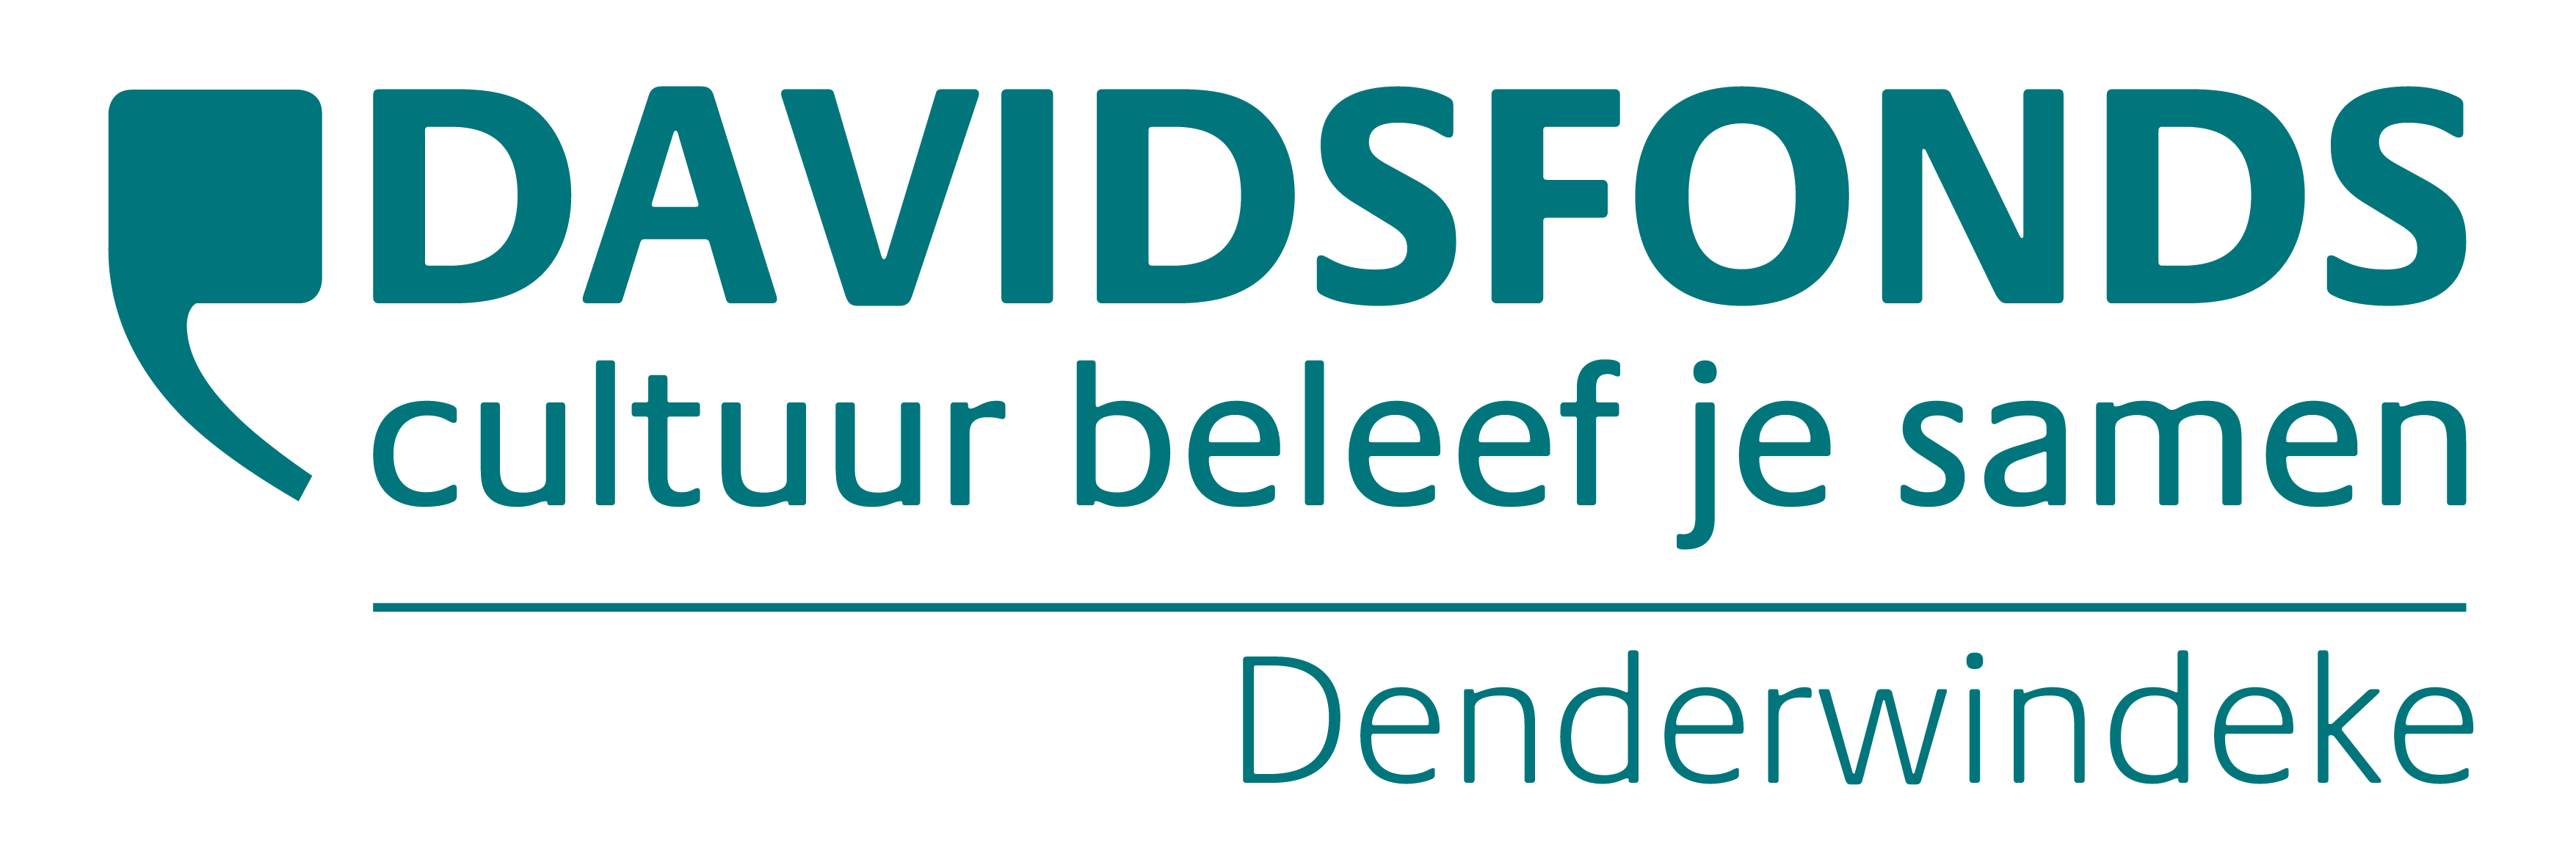 Davidsfonds Denderwindeke